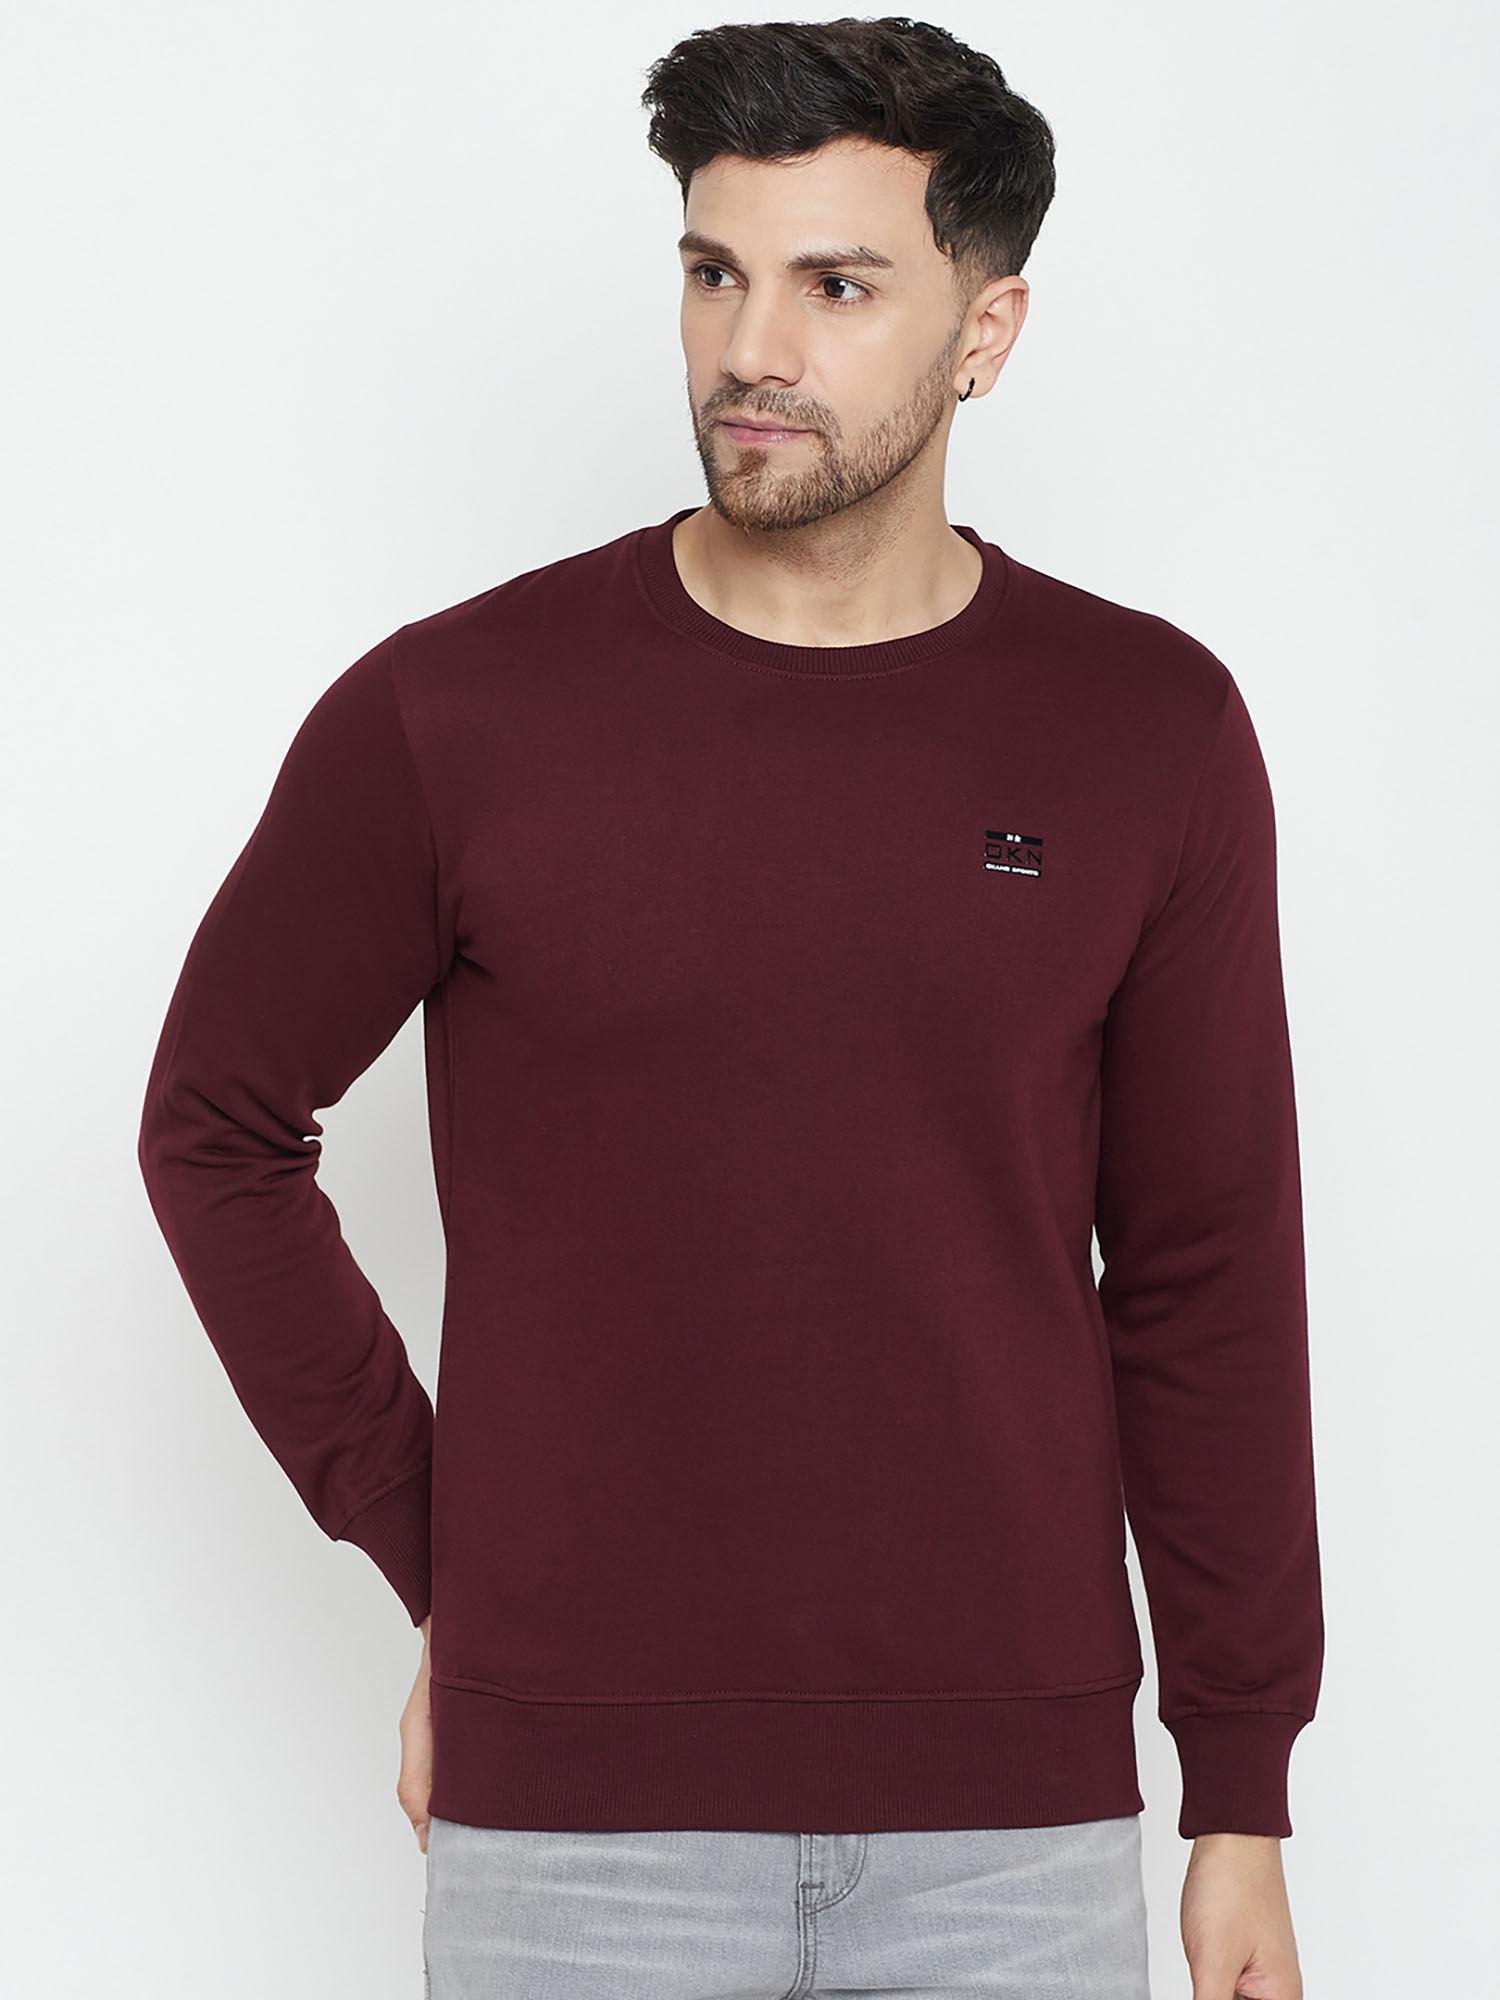 men burgundy solid/plain full sleeves round neck sweatshirt